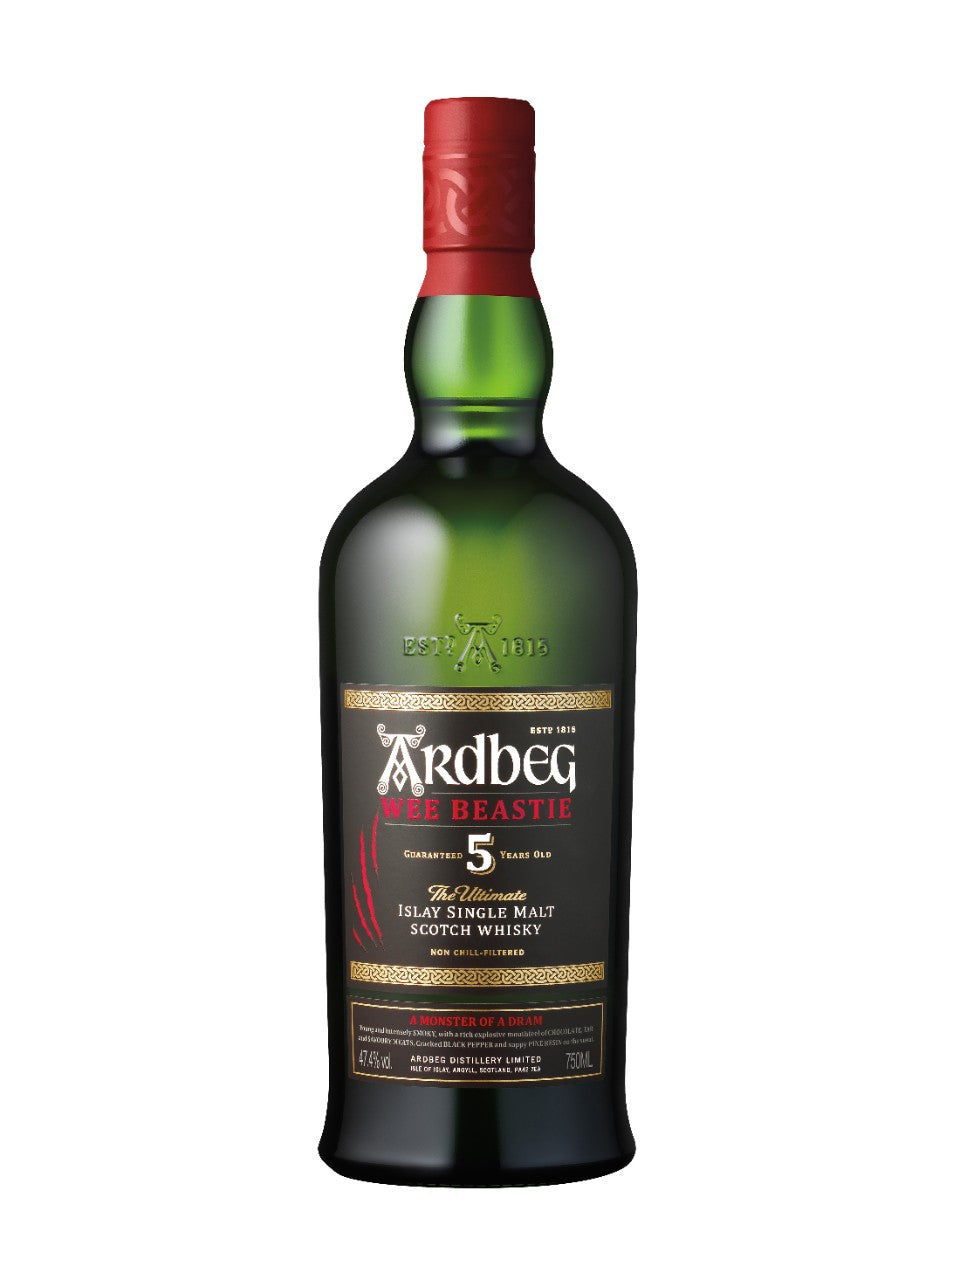 Ardbeg Wee Beastie 5 Year Old Whisky 750 mL bottle